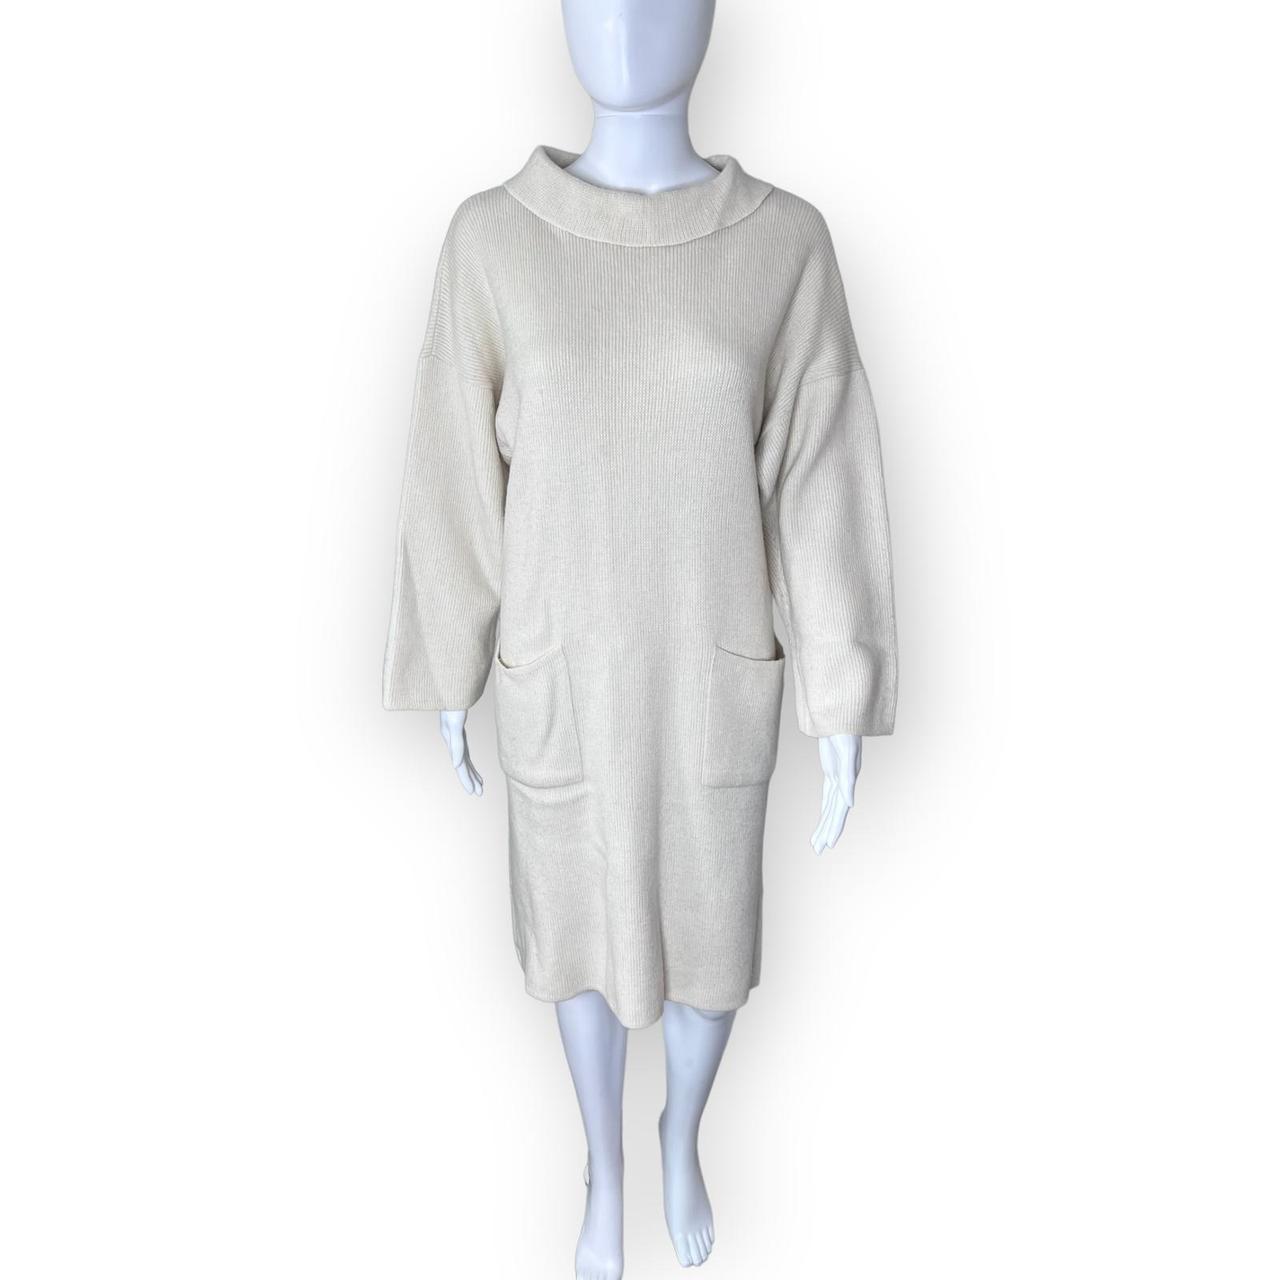 Collared Sweater Dress- Cream